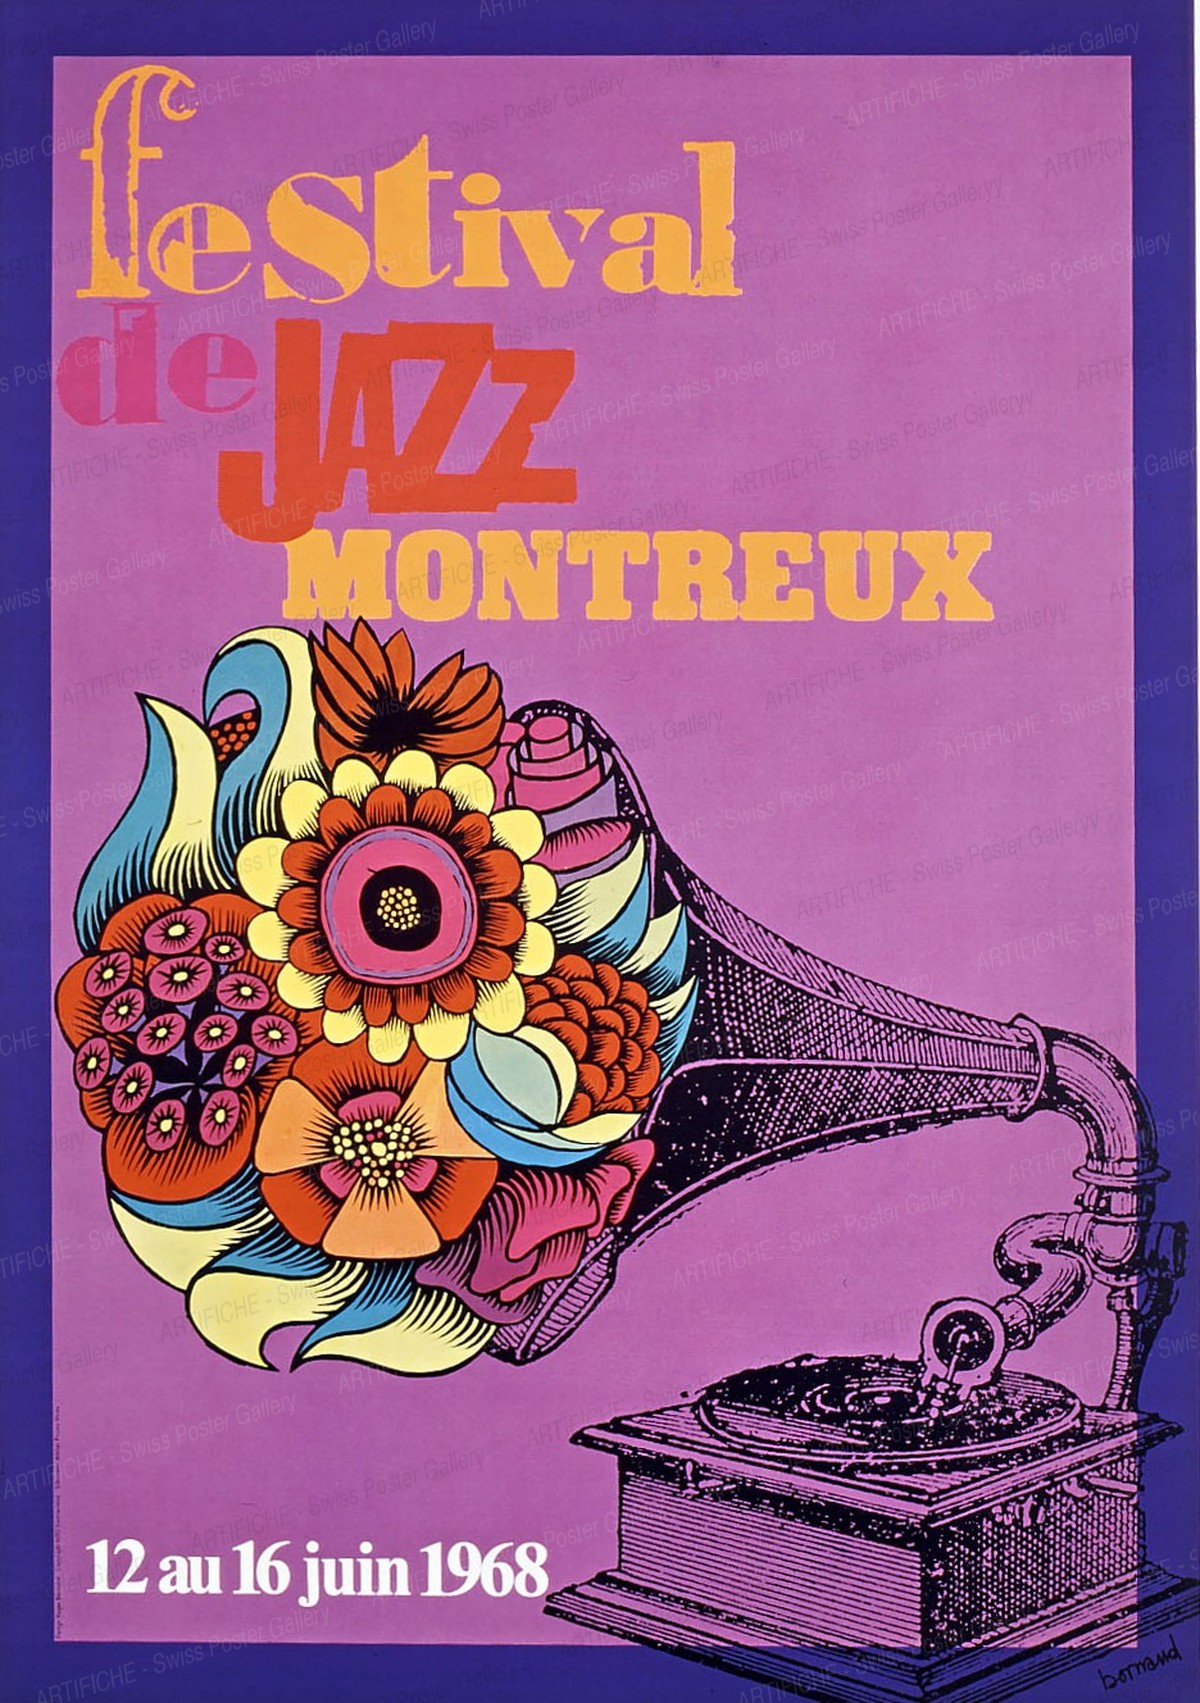 Montreux Jazz Festival 1968, Roger Bornand